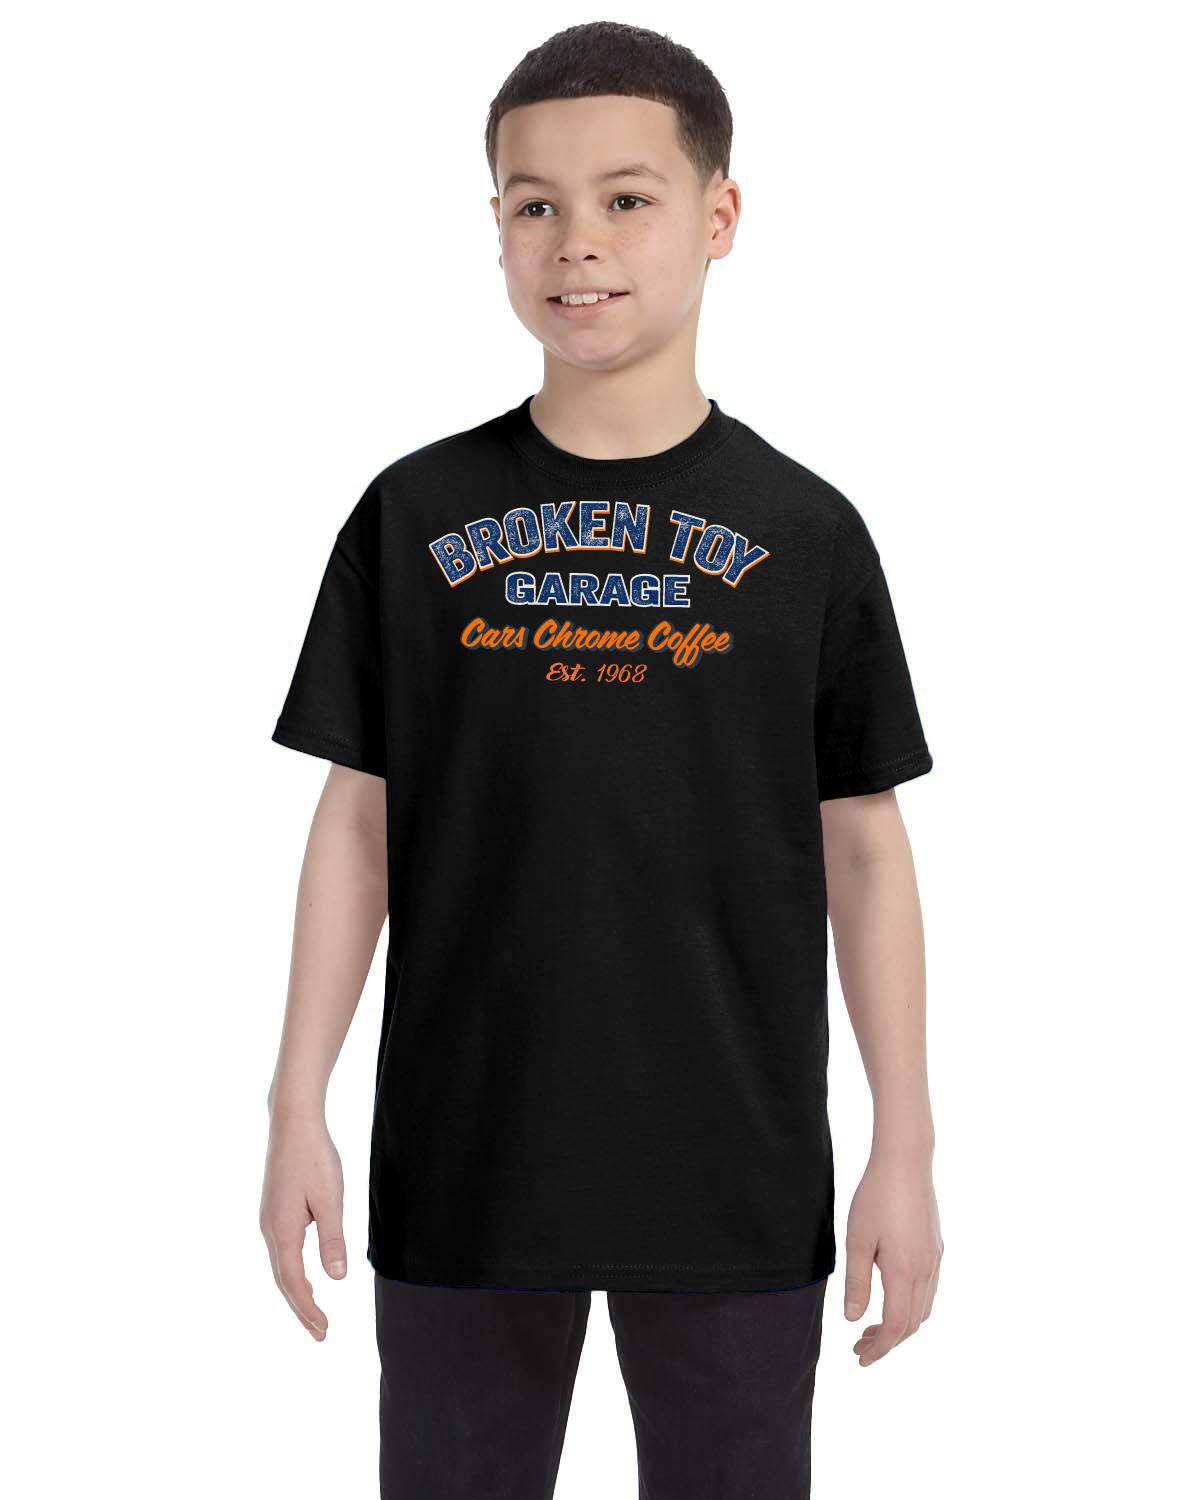 Broken Toy Garage Youth T-Shirt